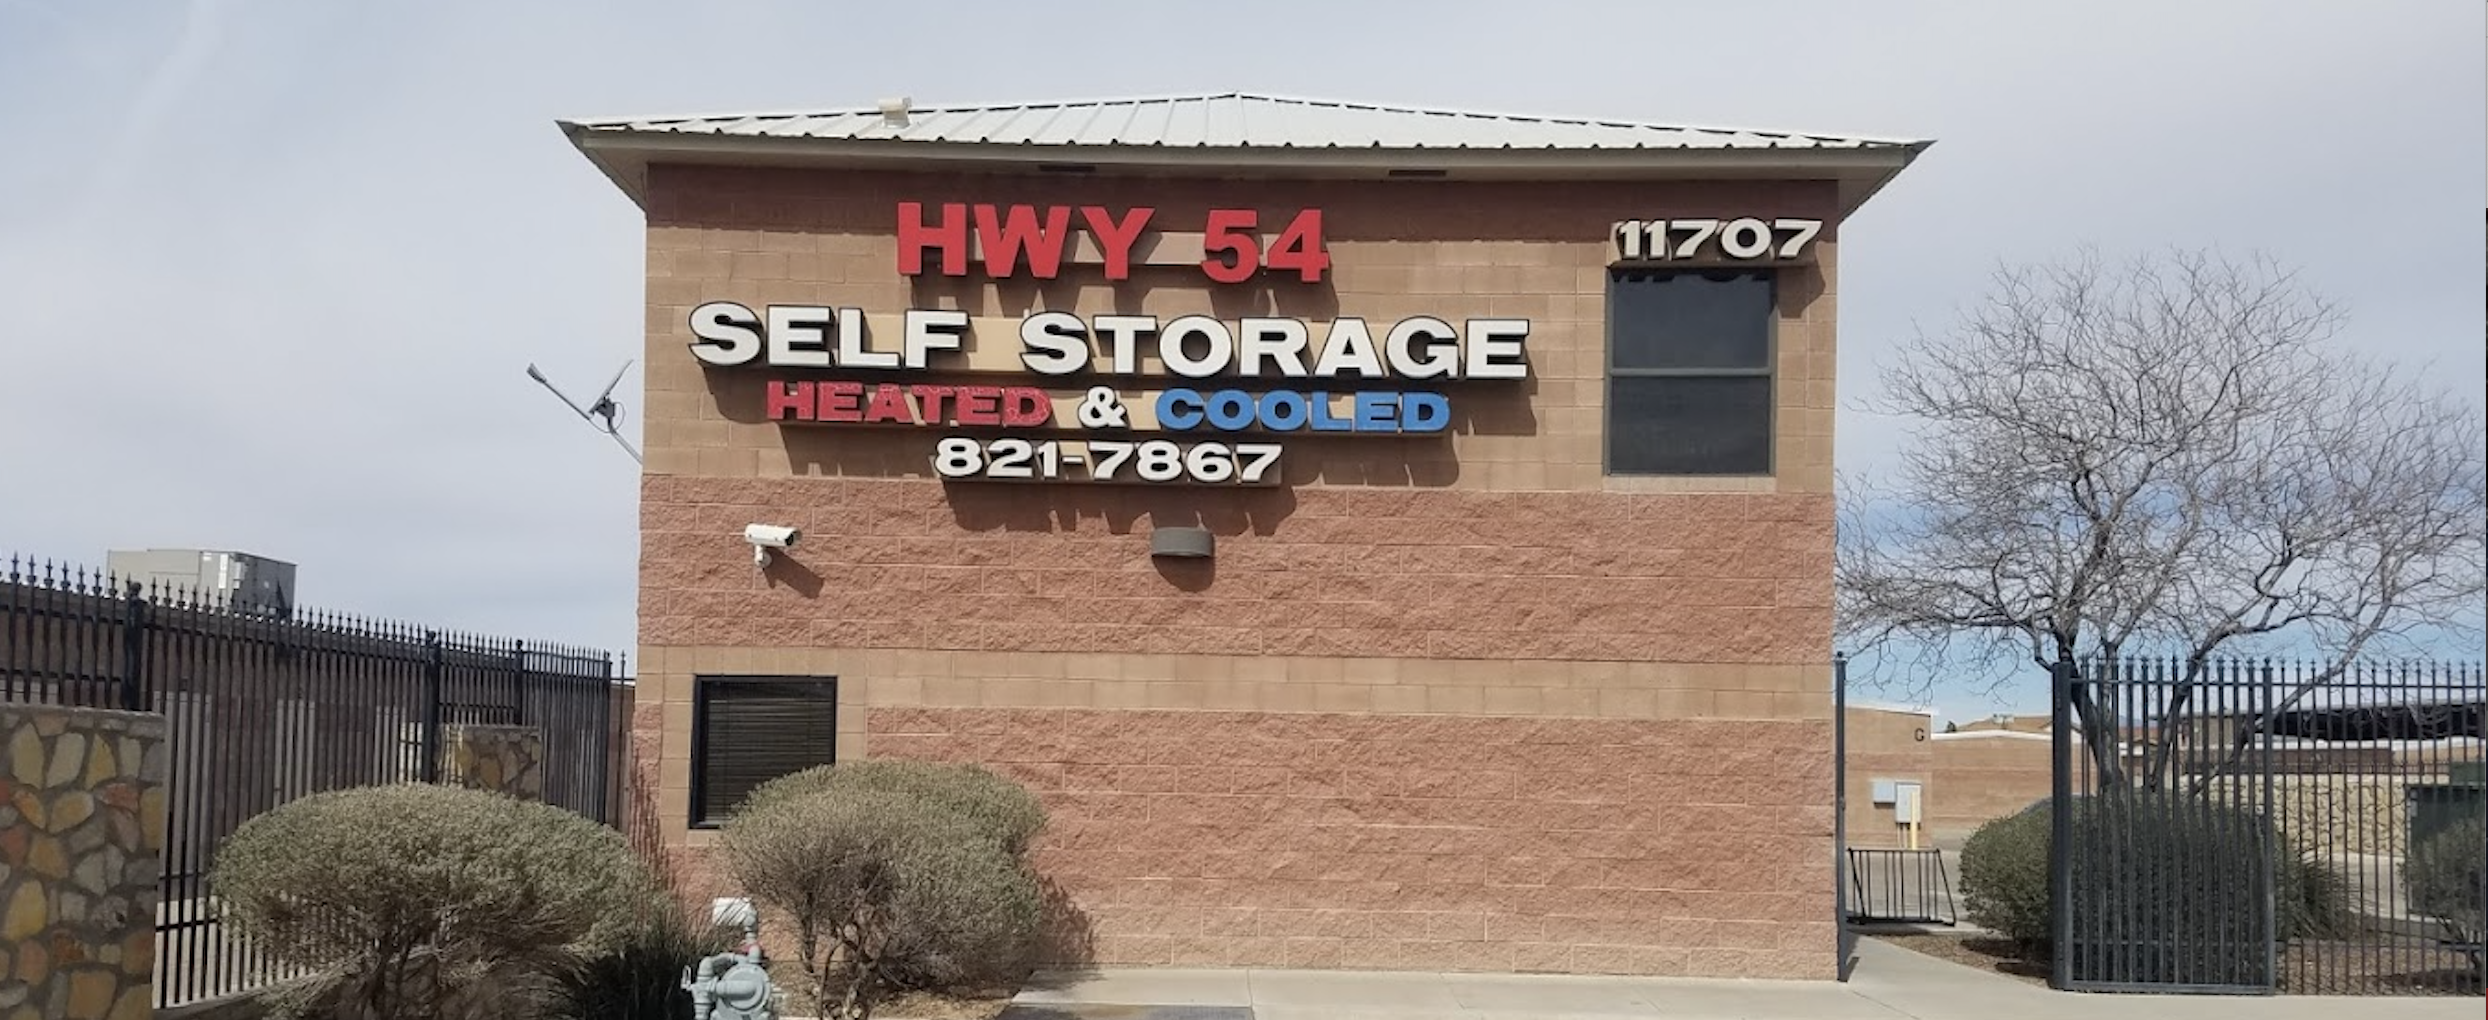 Highway 54 Self Storage in El Paso, TX 79934